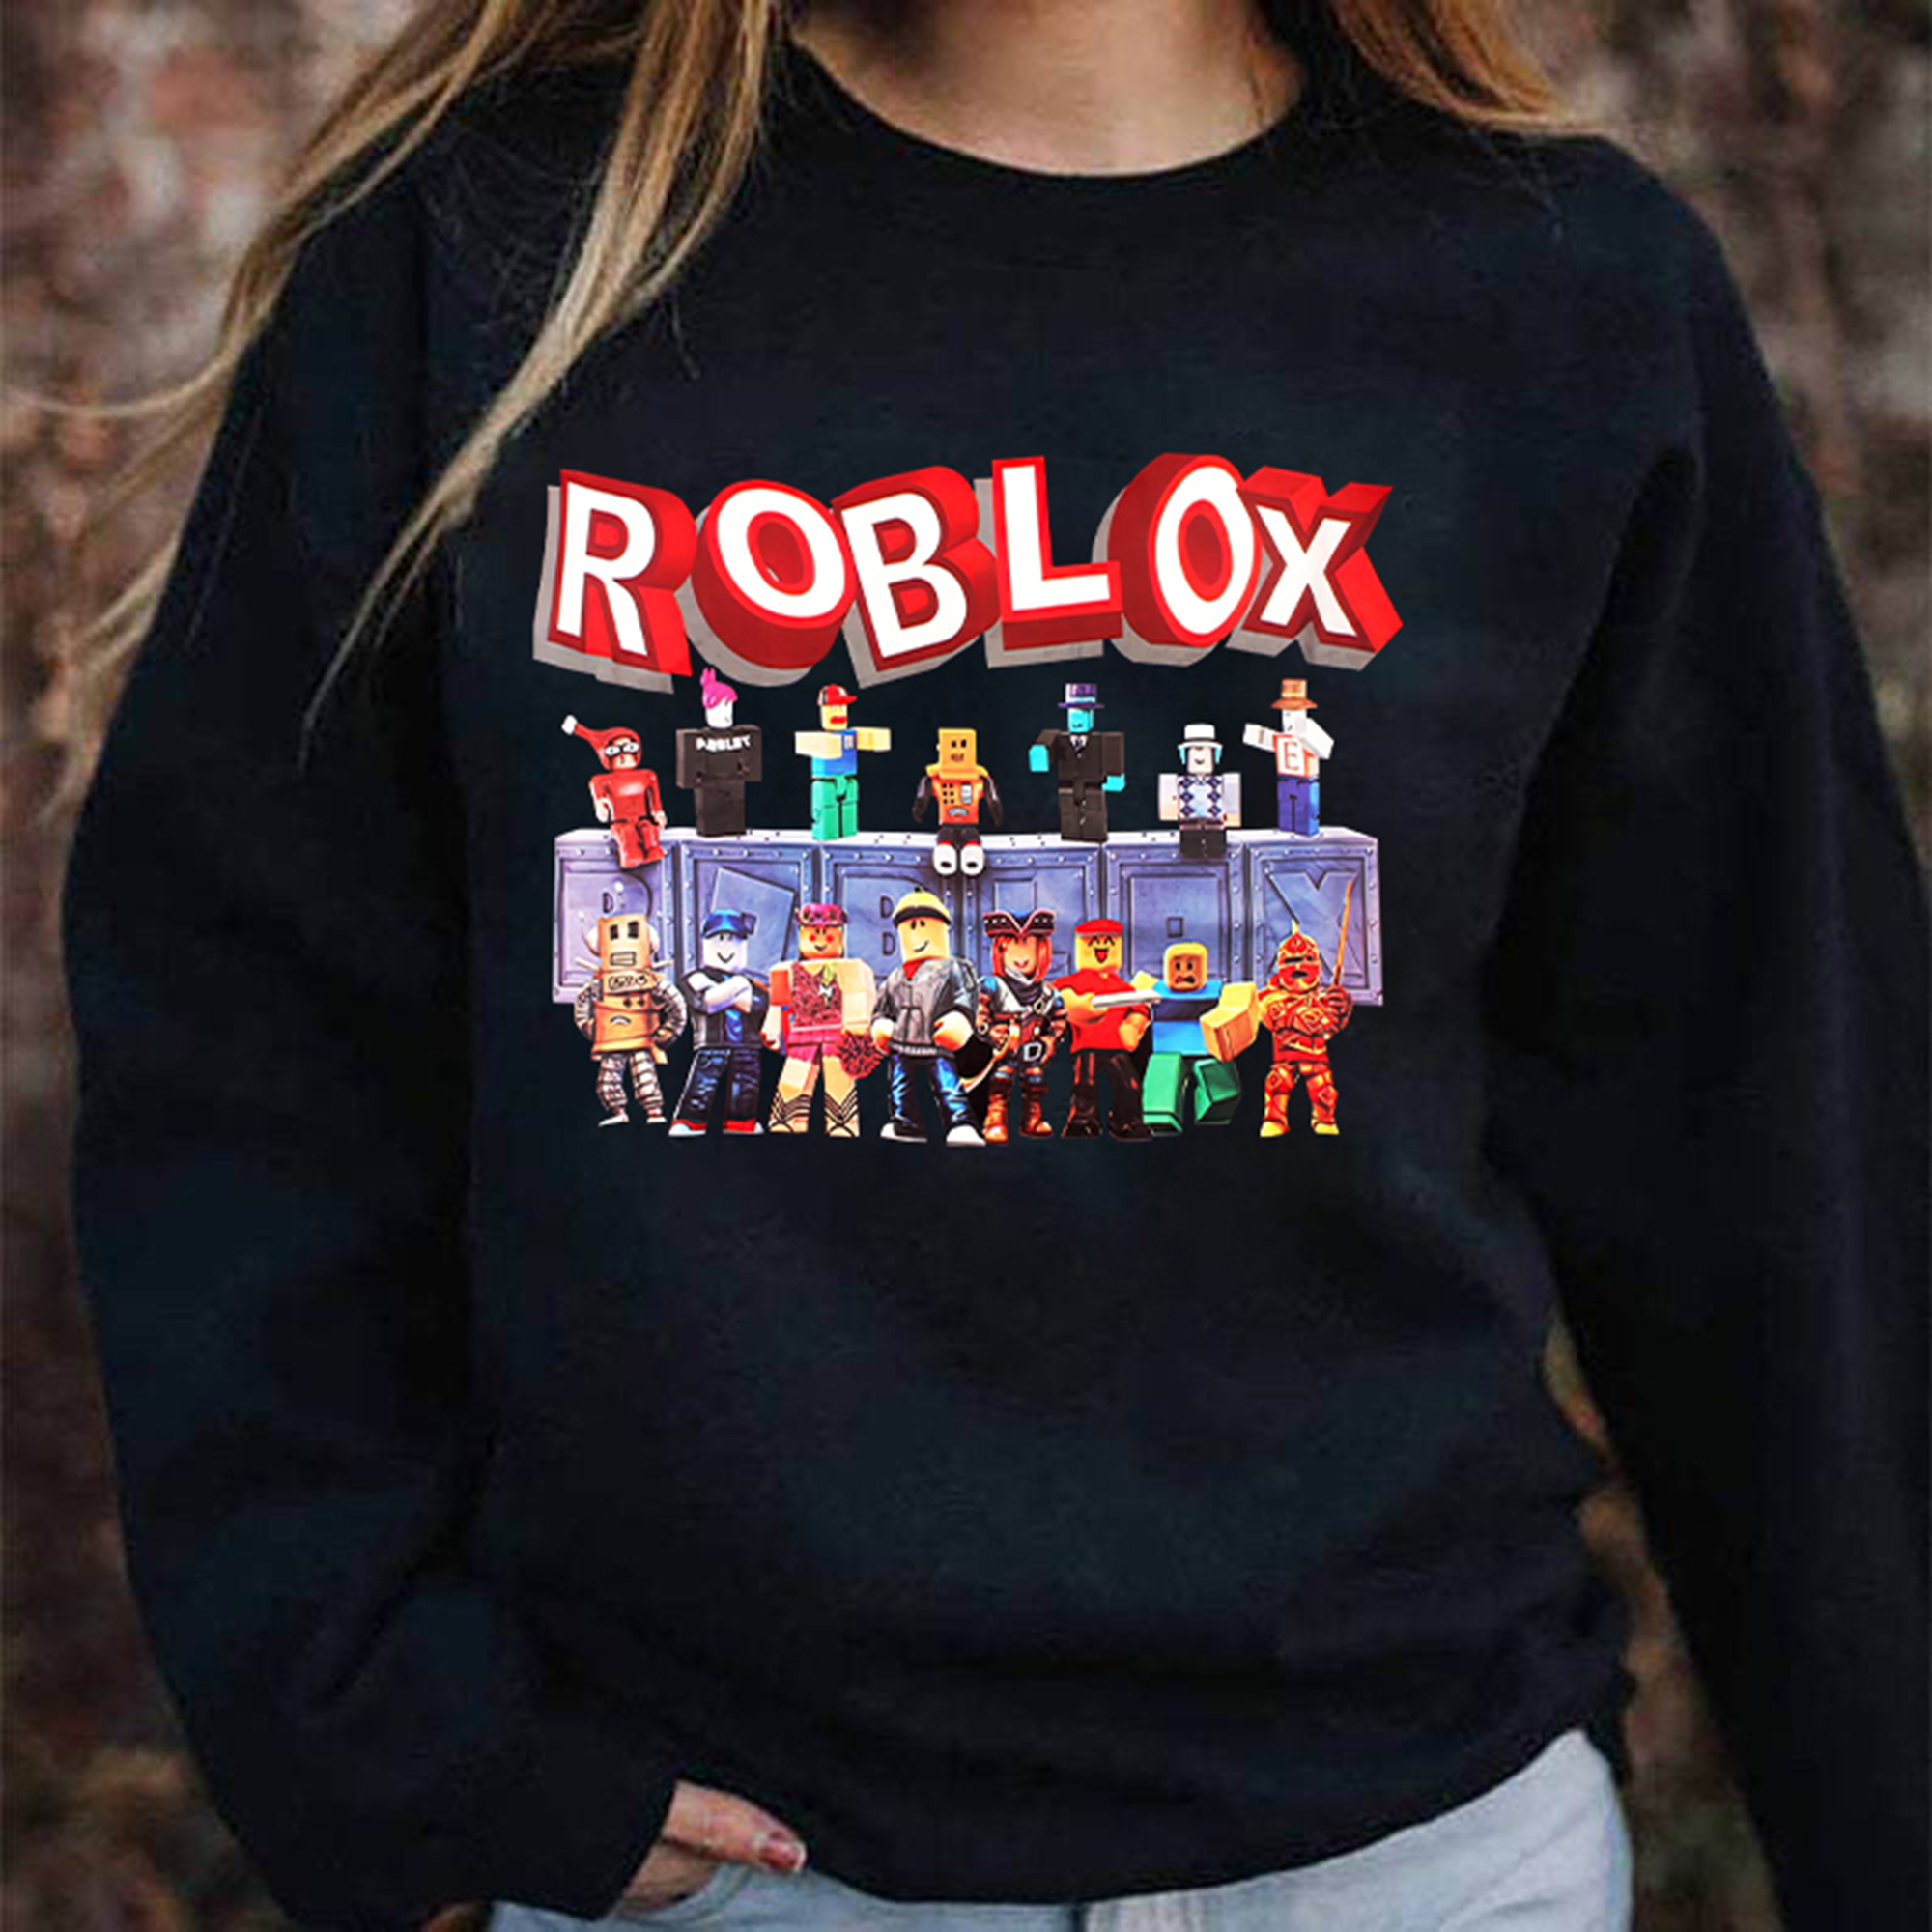 Roblox Shirt, Kids Online Gamers Cartoon Unisex Boy Girl gift T shirt, Roblox Birthday Shirt, Roblox Character Tshirt